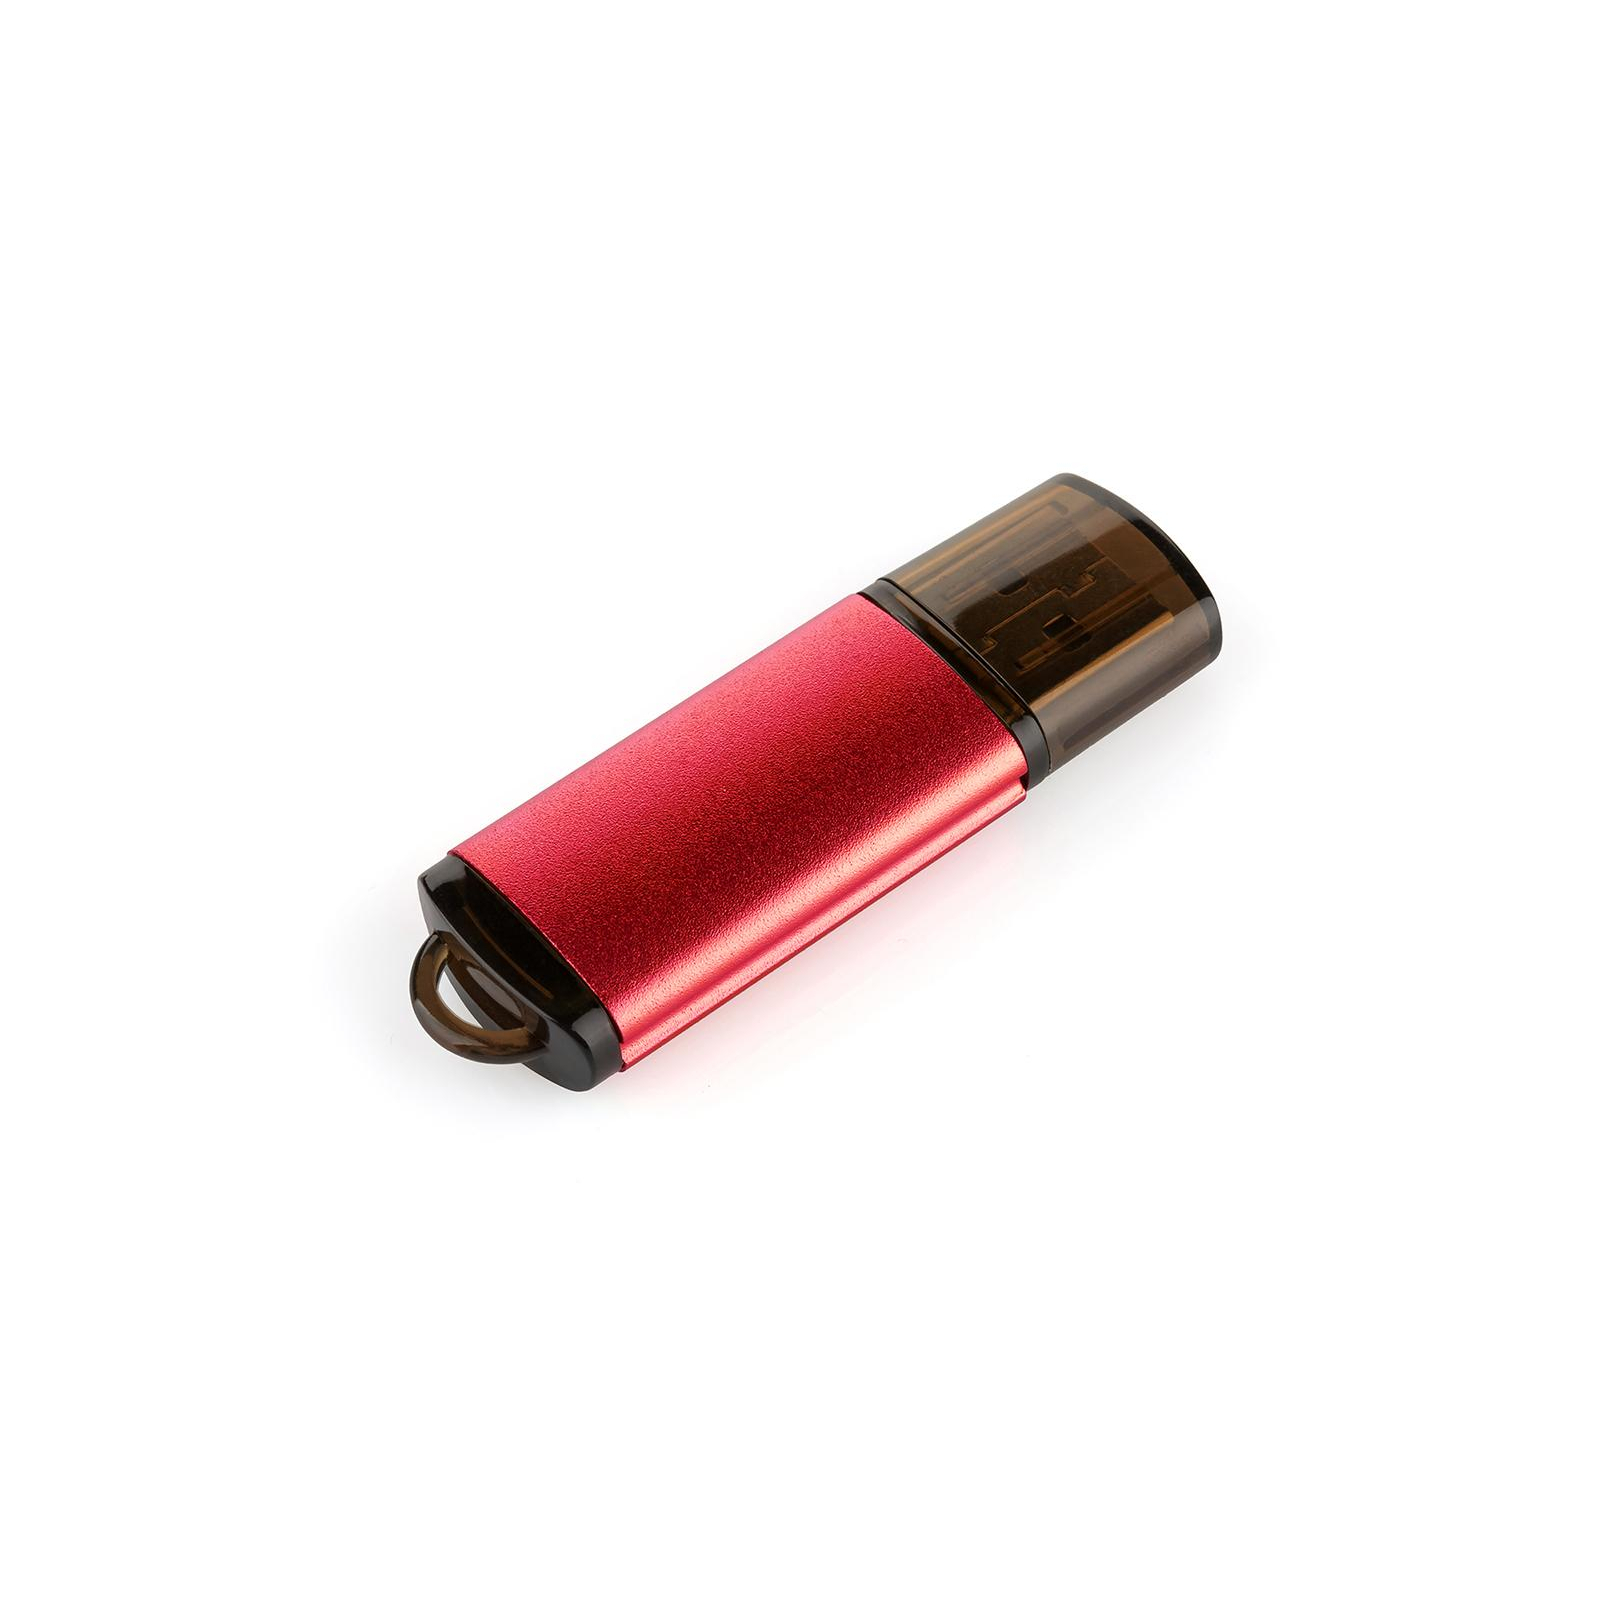 USB флеш накопитель eXceleram 64GB A3 Series Red USB 2.0 (EXA3U2RE64) изображение 2